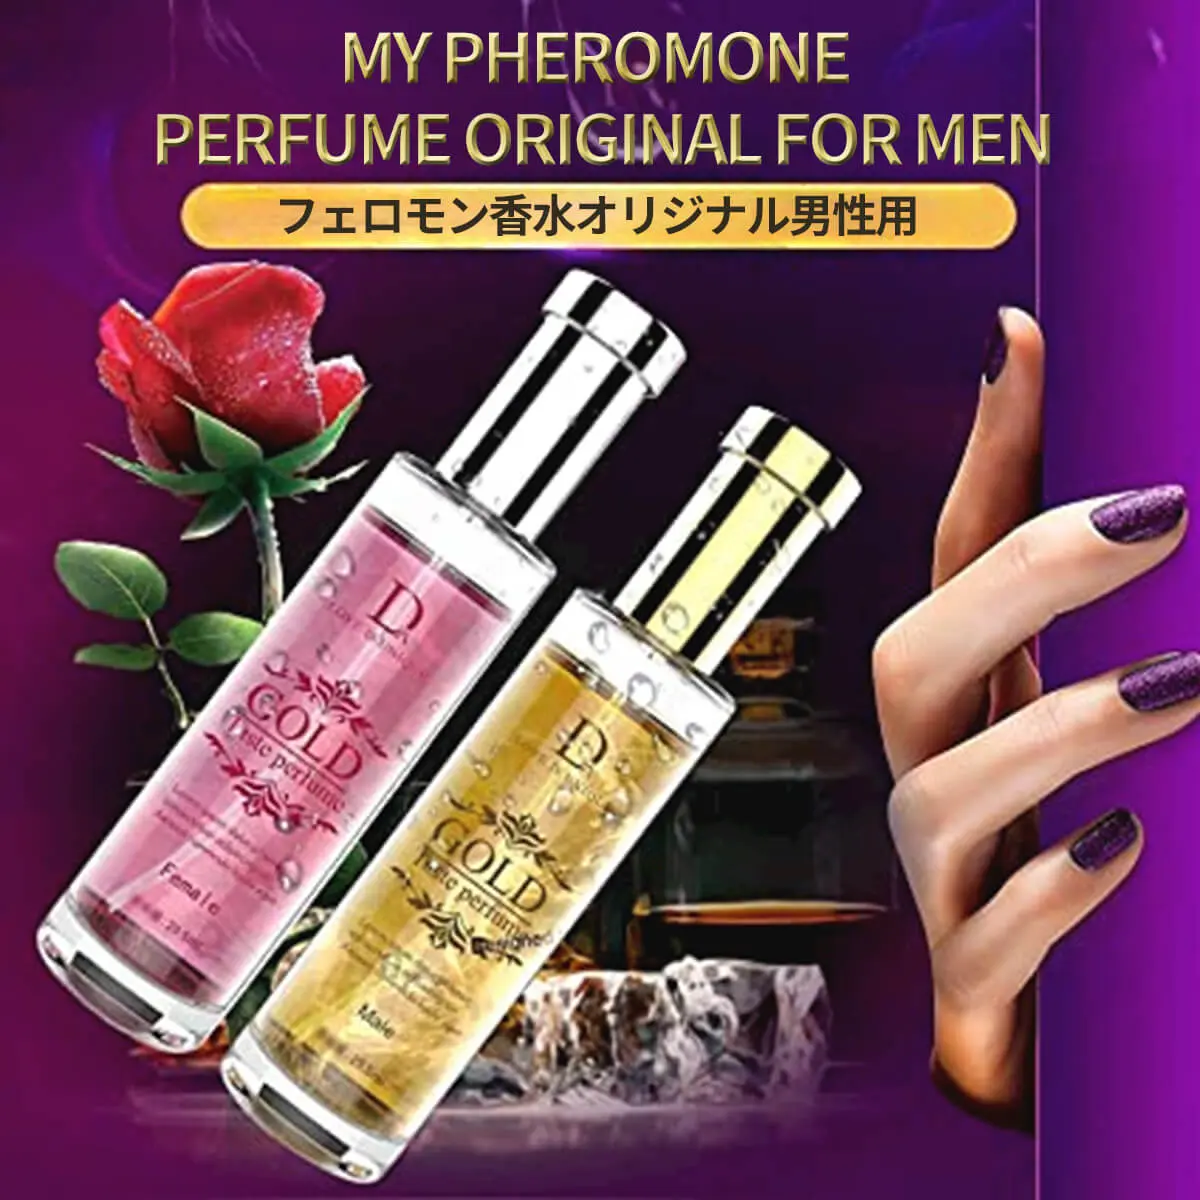 best perfumes for young girls，pheromone oil for woman tiktok，my pheromone perfume original for women，best perfumes for young girls，pheromones perfumes for women，perfumes for women